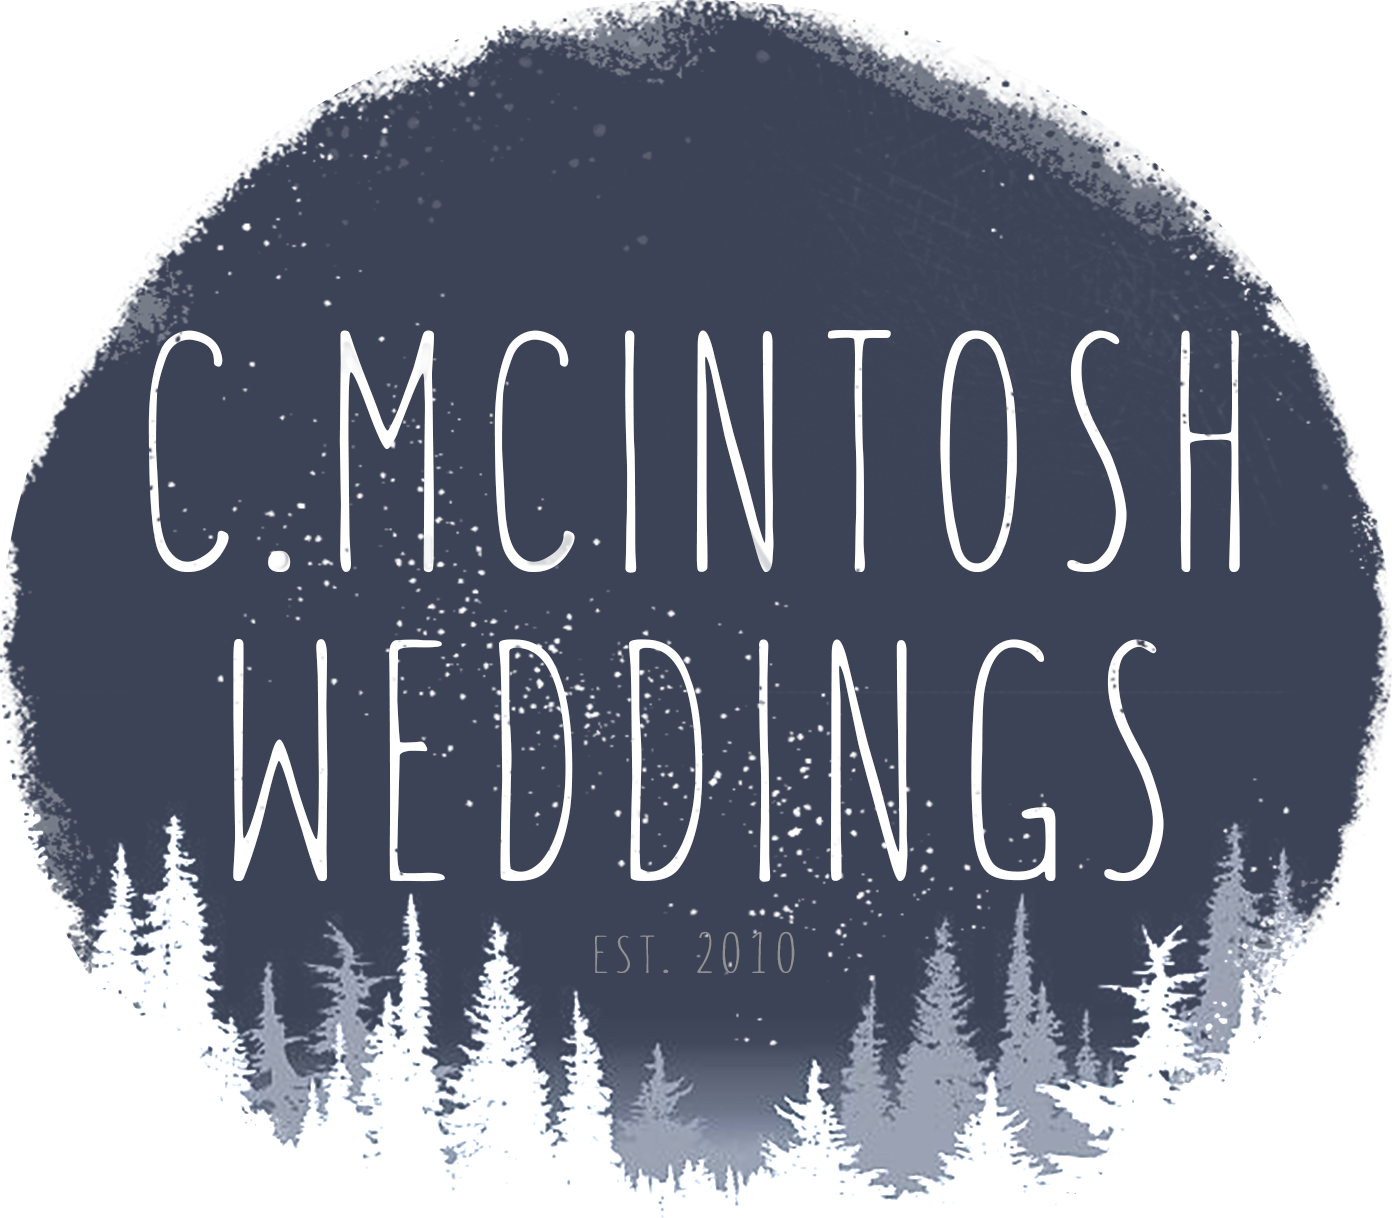 C. McIntosh Weddings